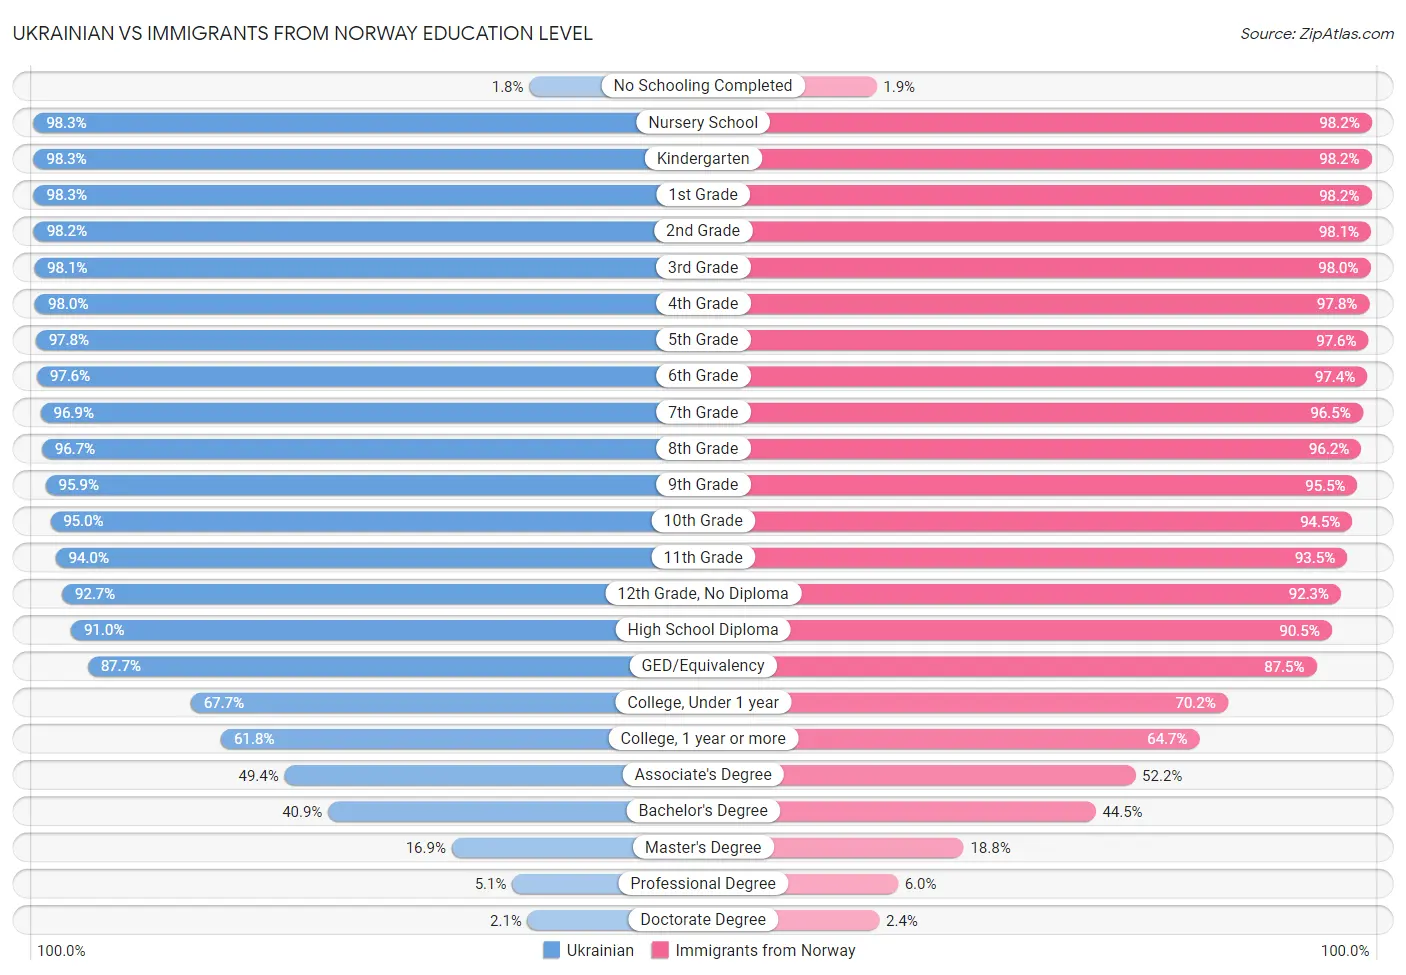 Ukrainian vs Immigrants from Norway Education Level